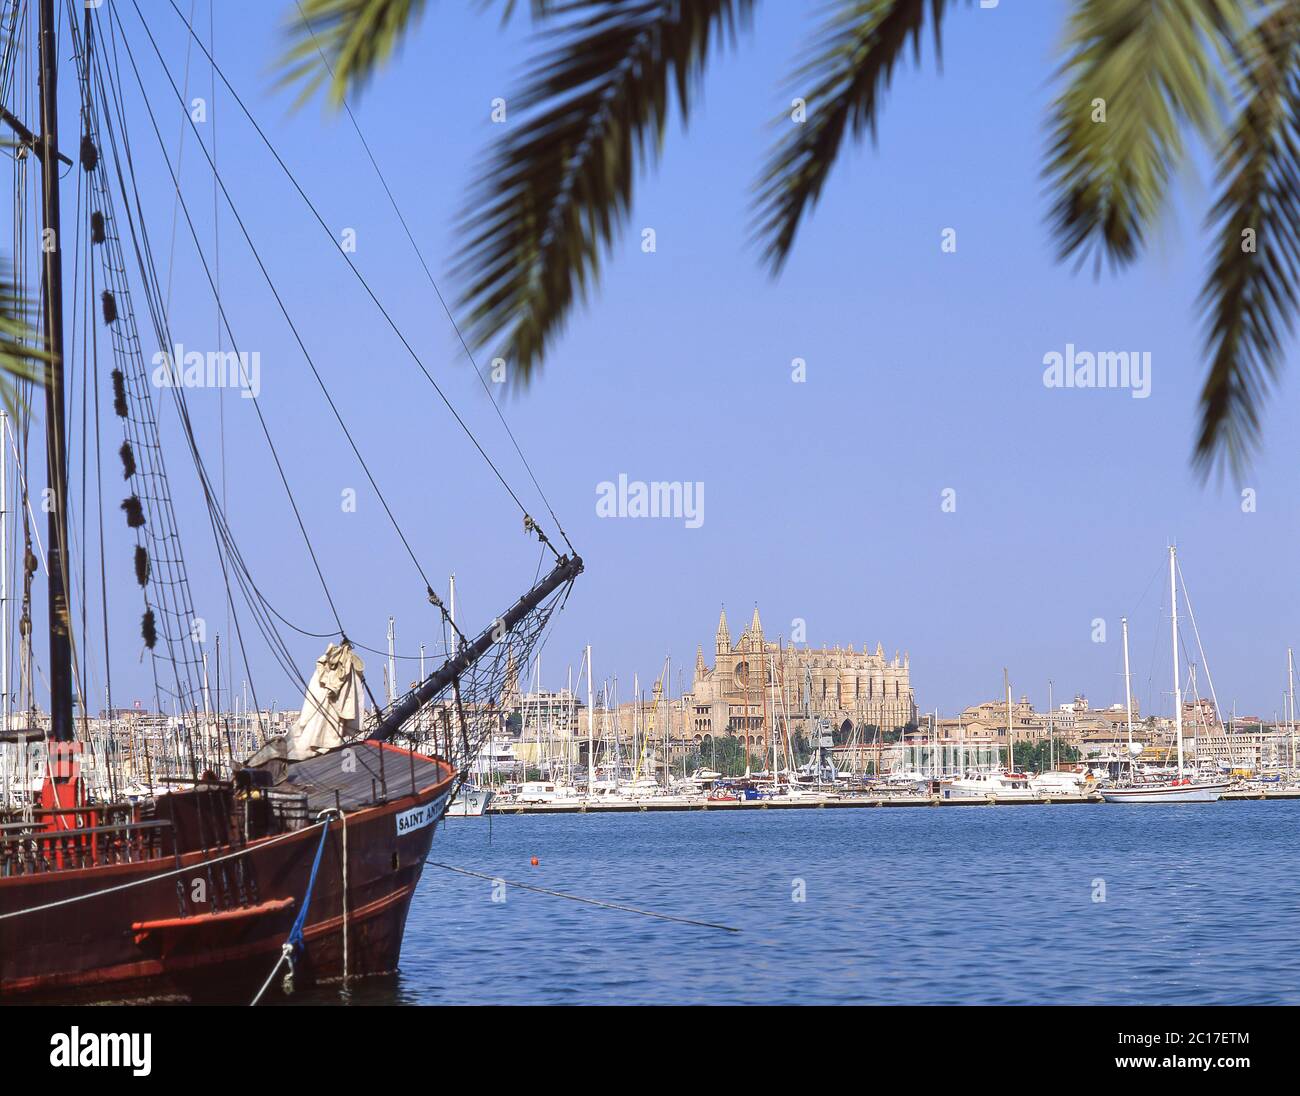 Vue sur le port de Palma de Majorque, Majorque (Majorque), Iles Baléares, Espagne Banque D'Images